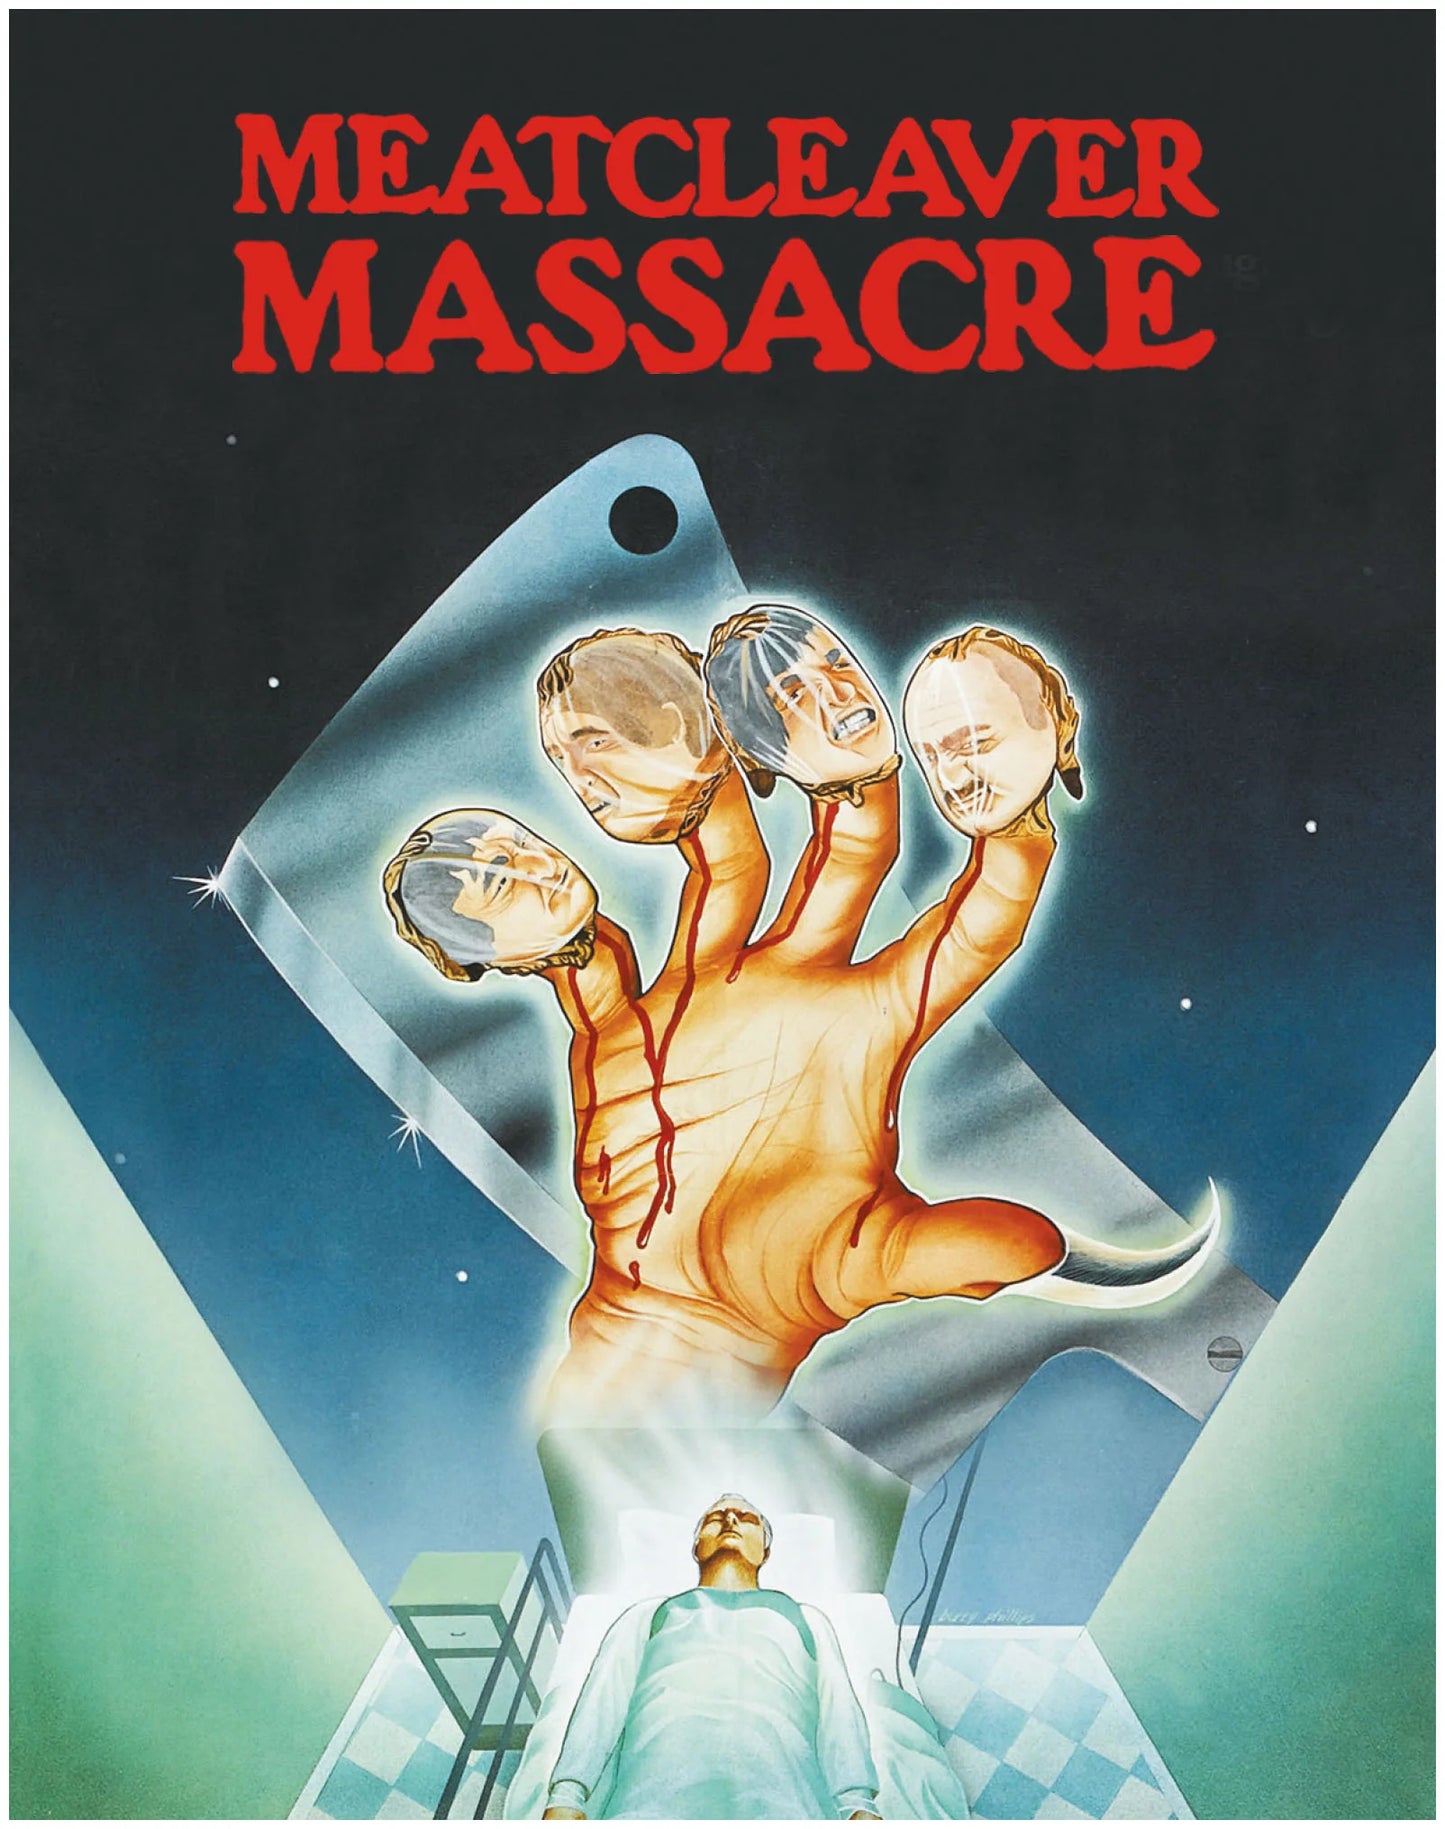 Meatcleaver Massacre (1976) Blu-ray Limited Edition (101 Films UK/Region B)